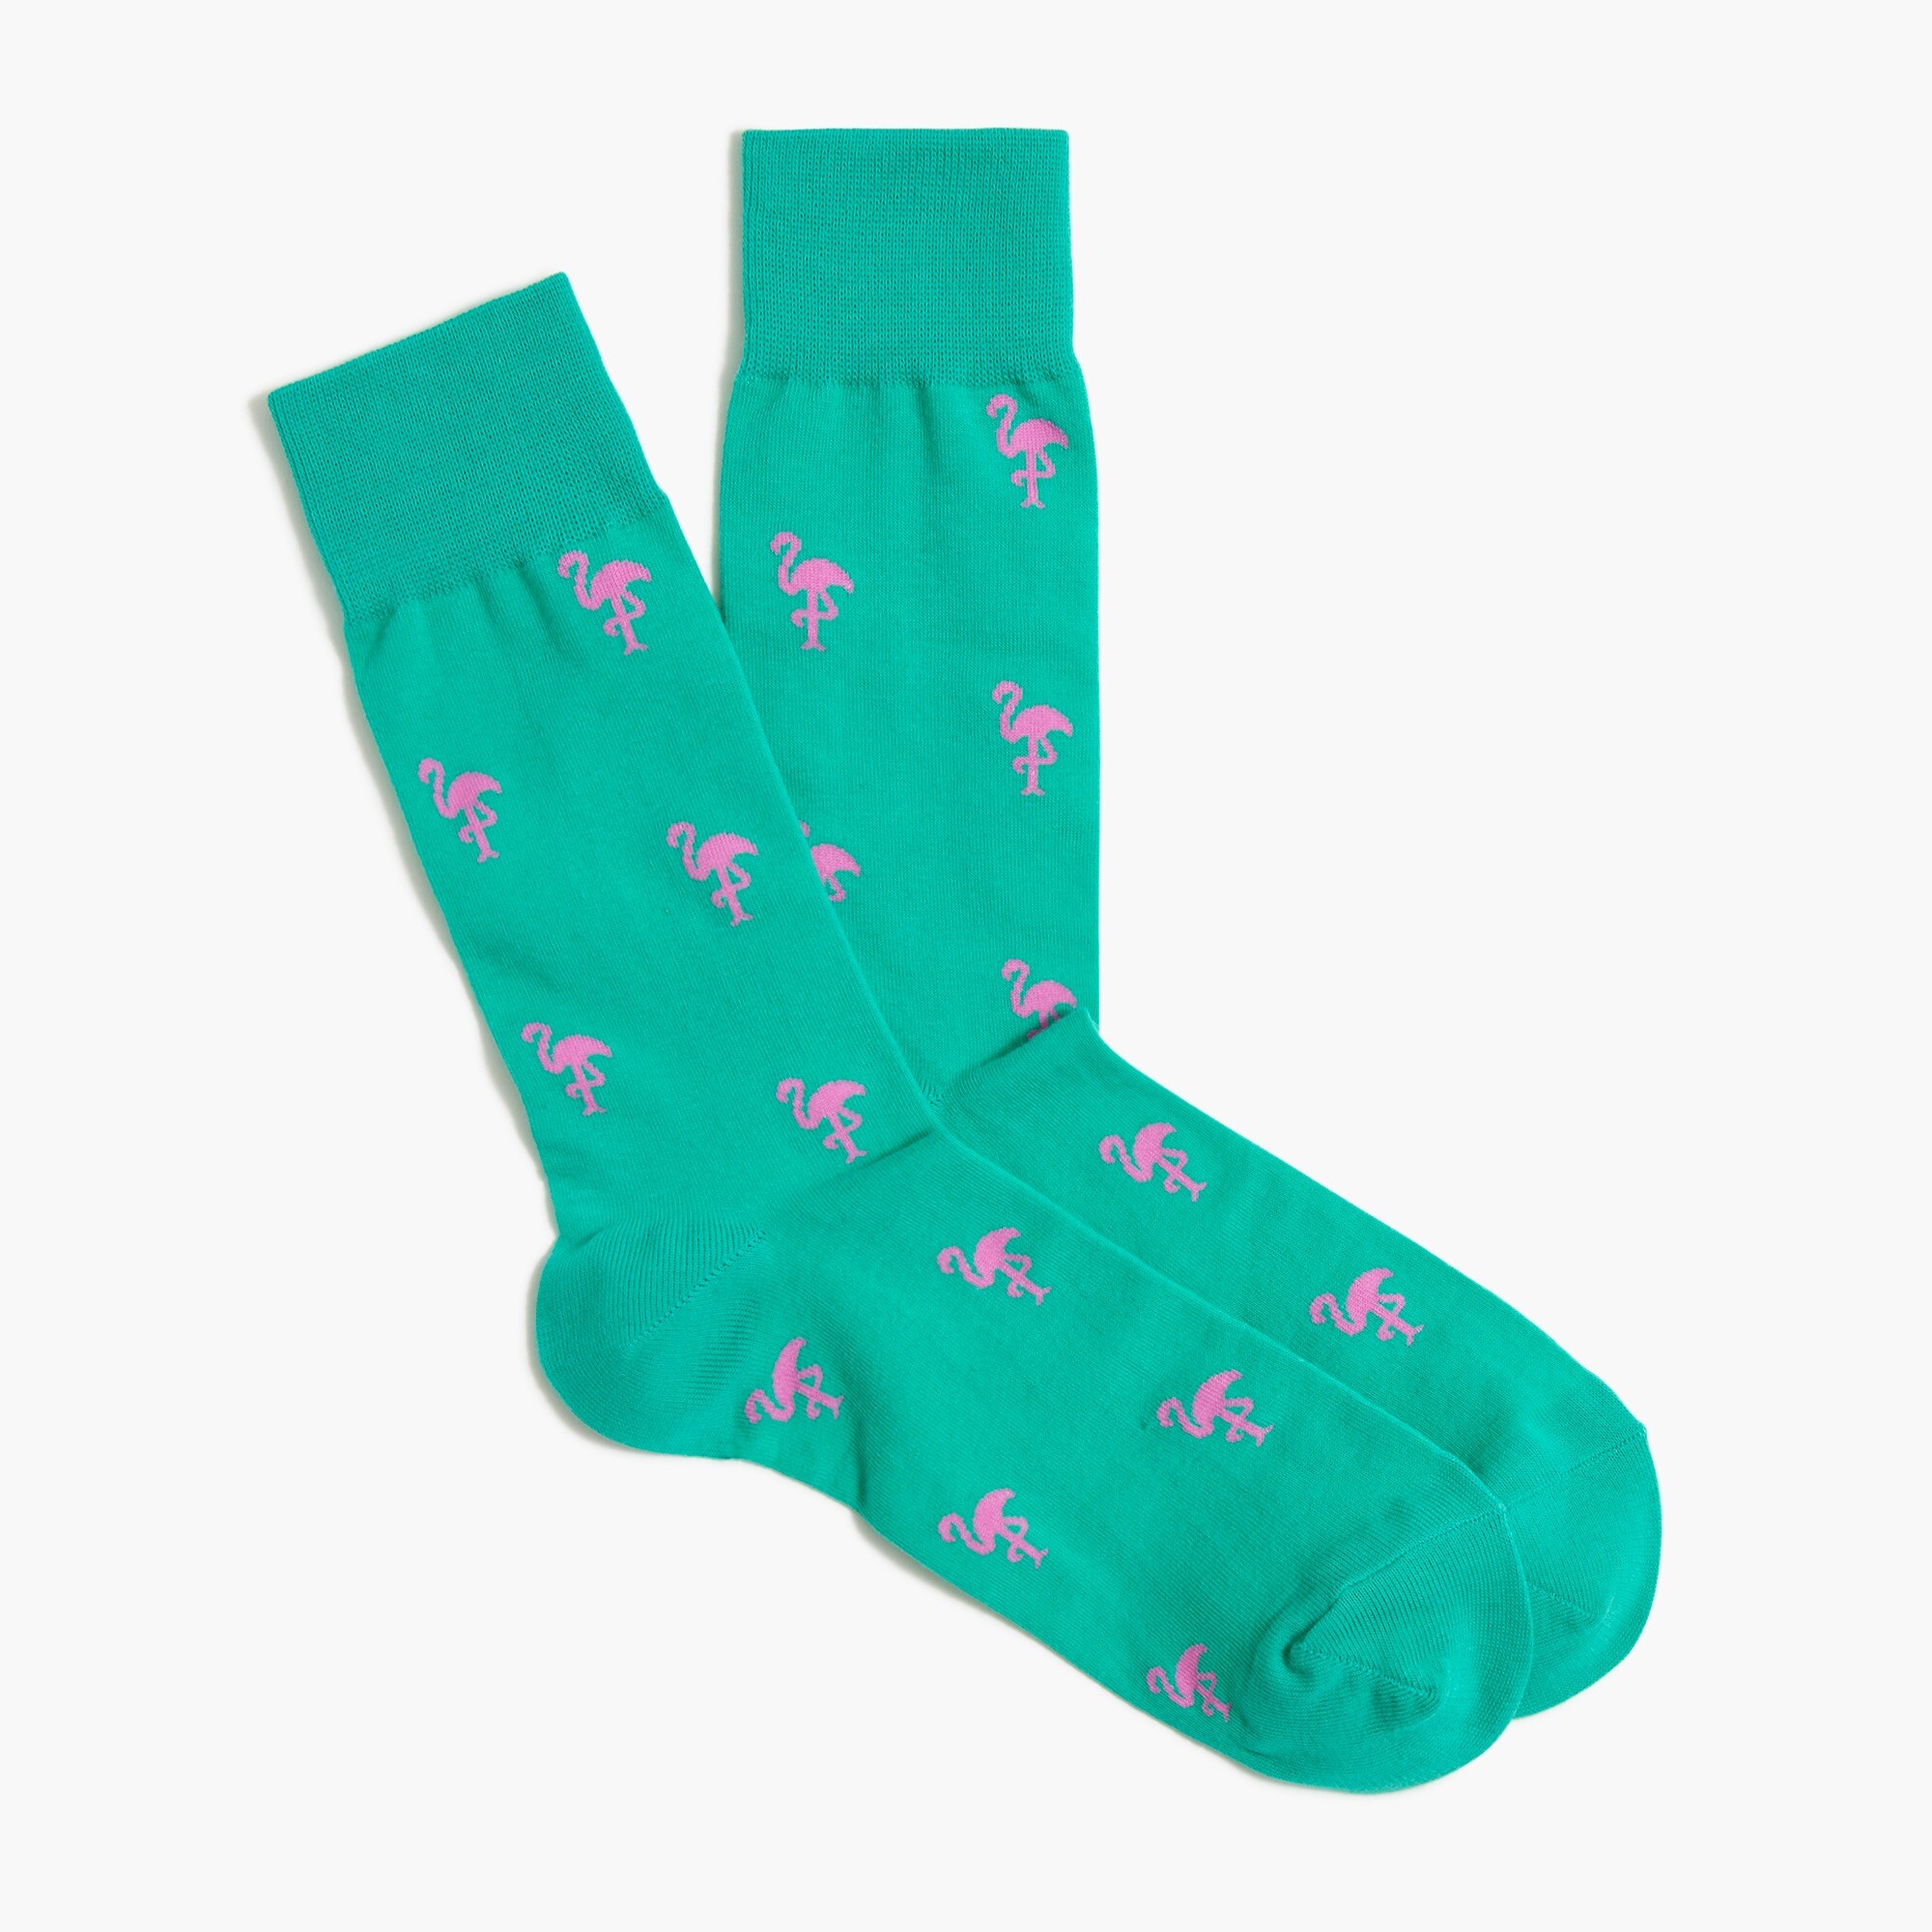  Flamingo socks